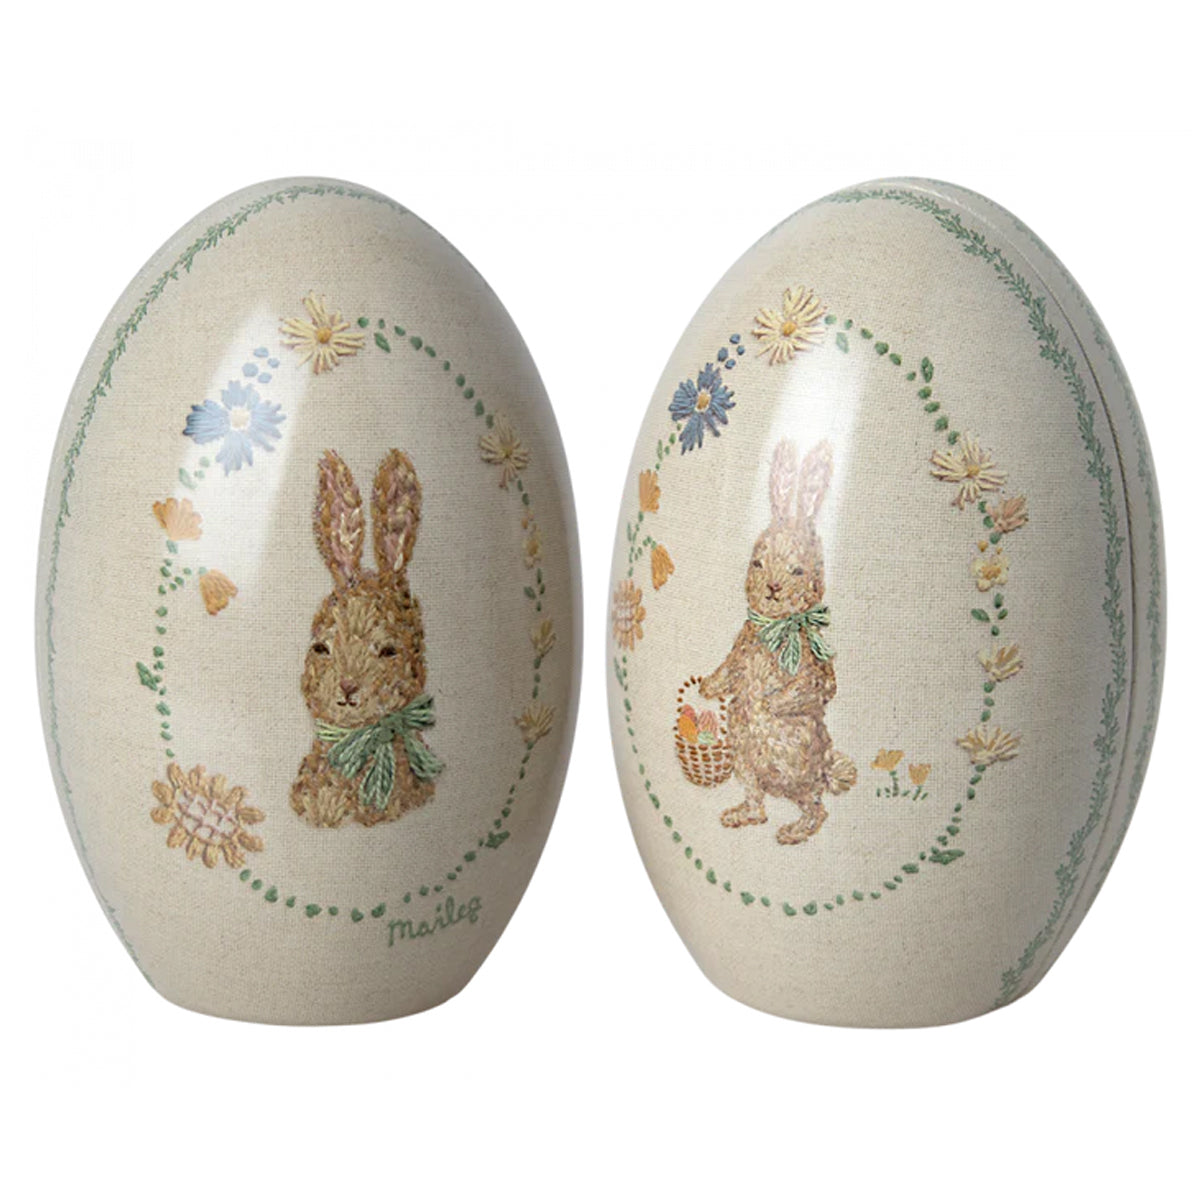 Maileg Easter Egg tins, set of 2 - Mint